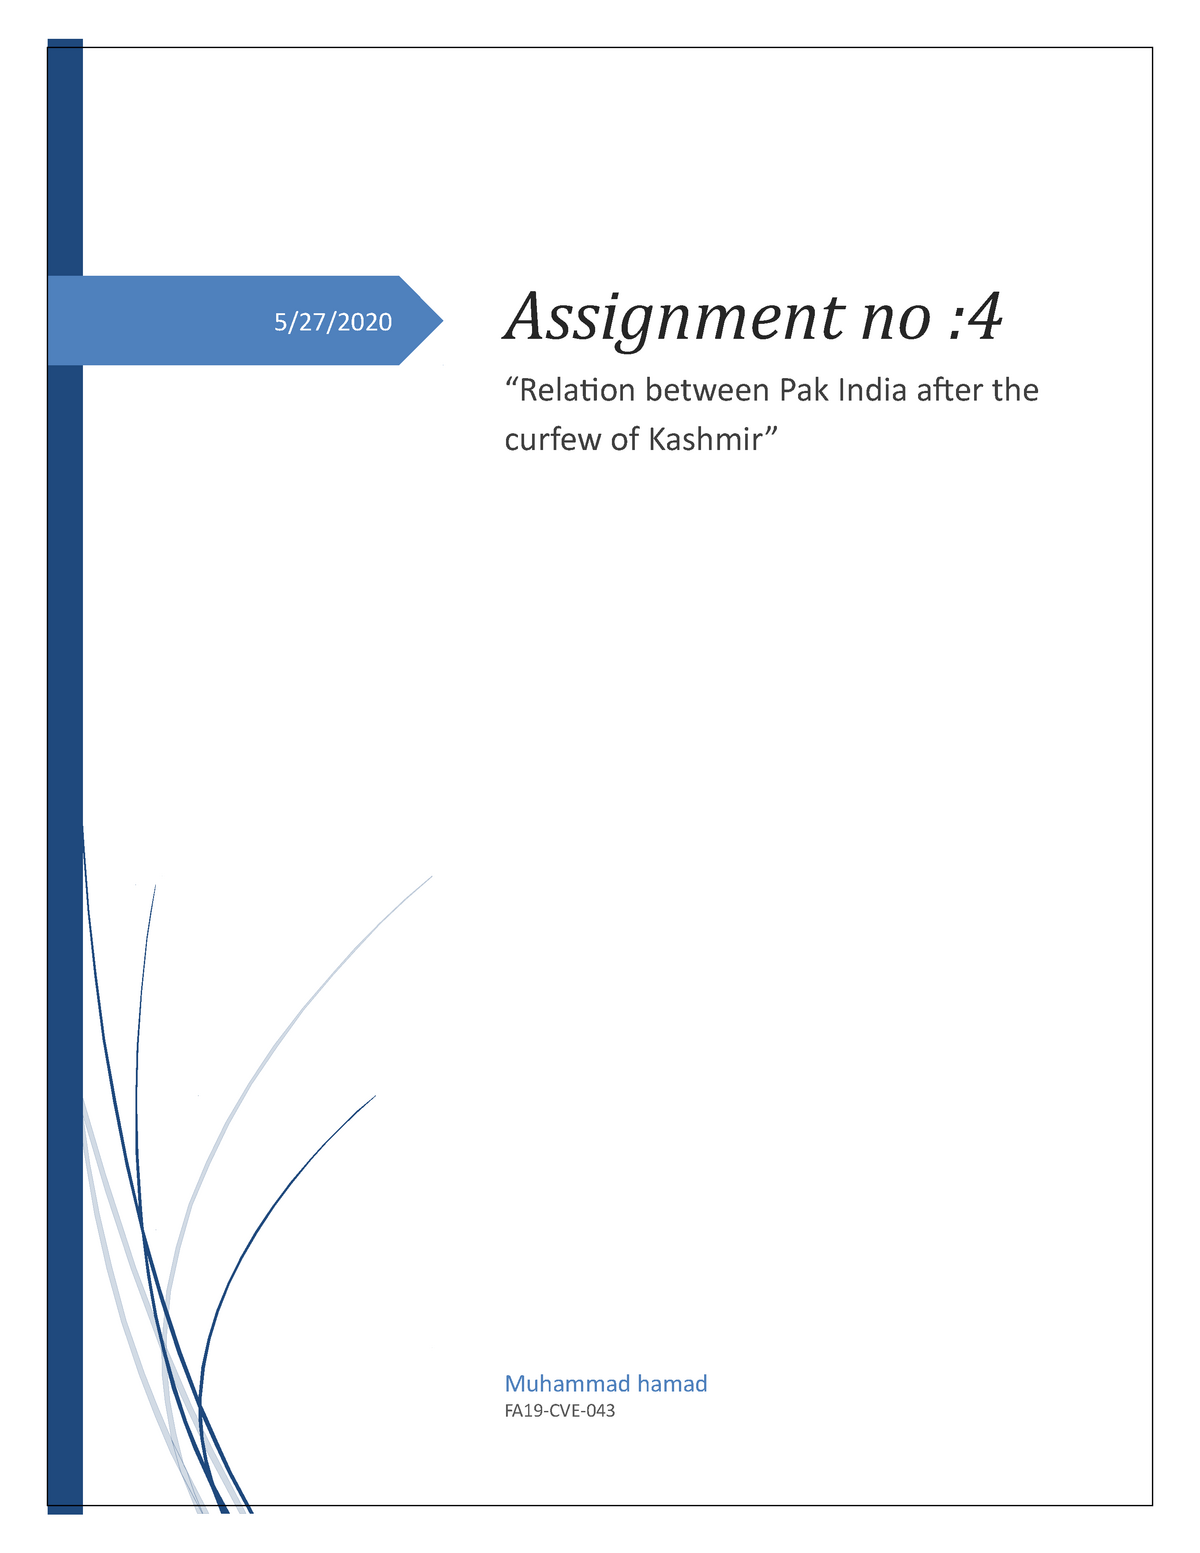 kashmir issue assignment pdf